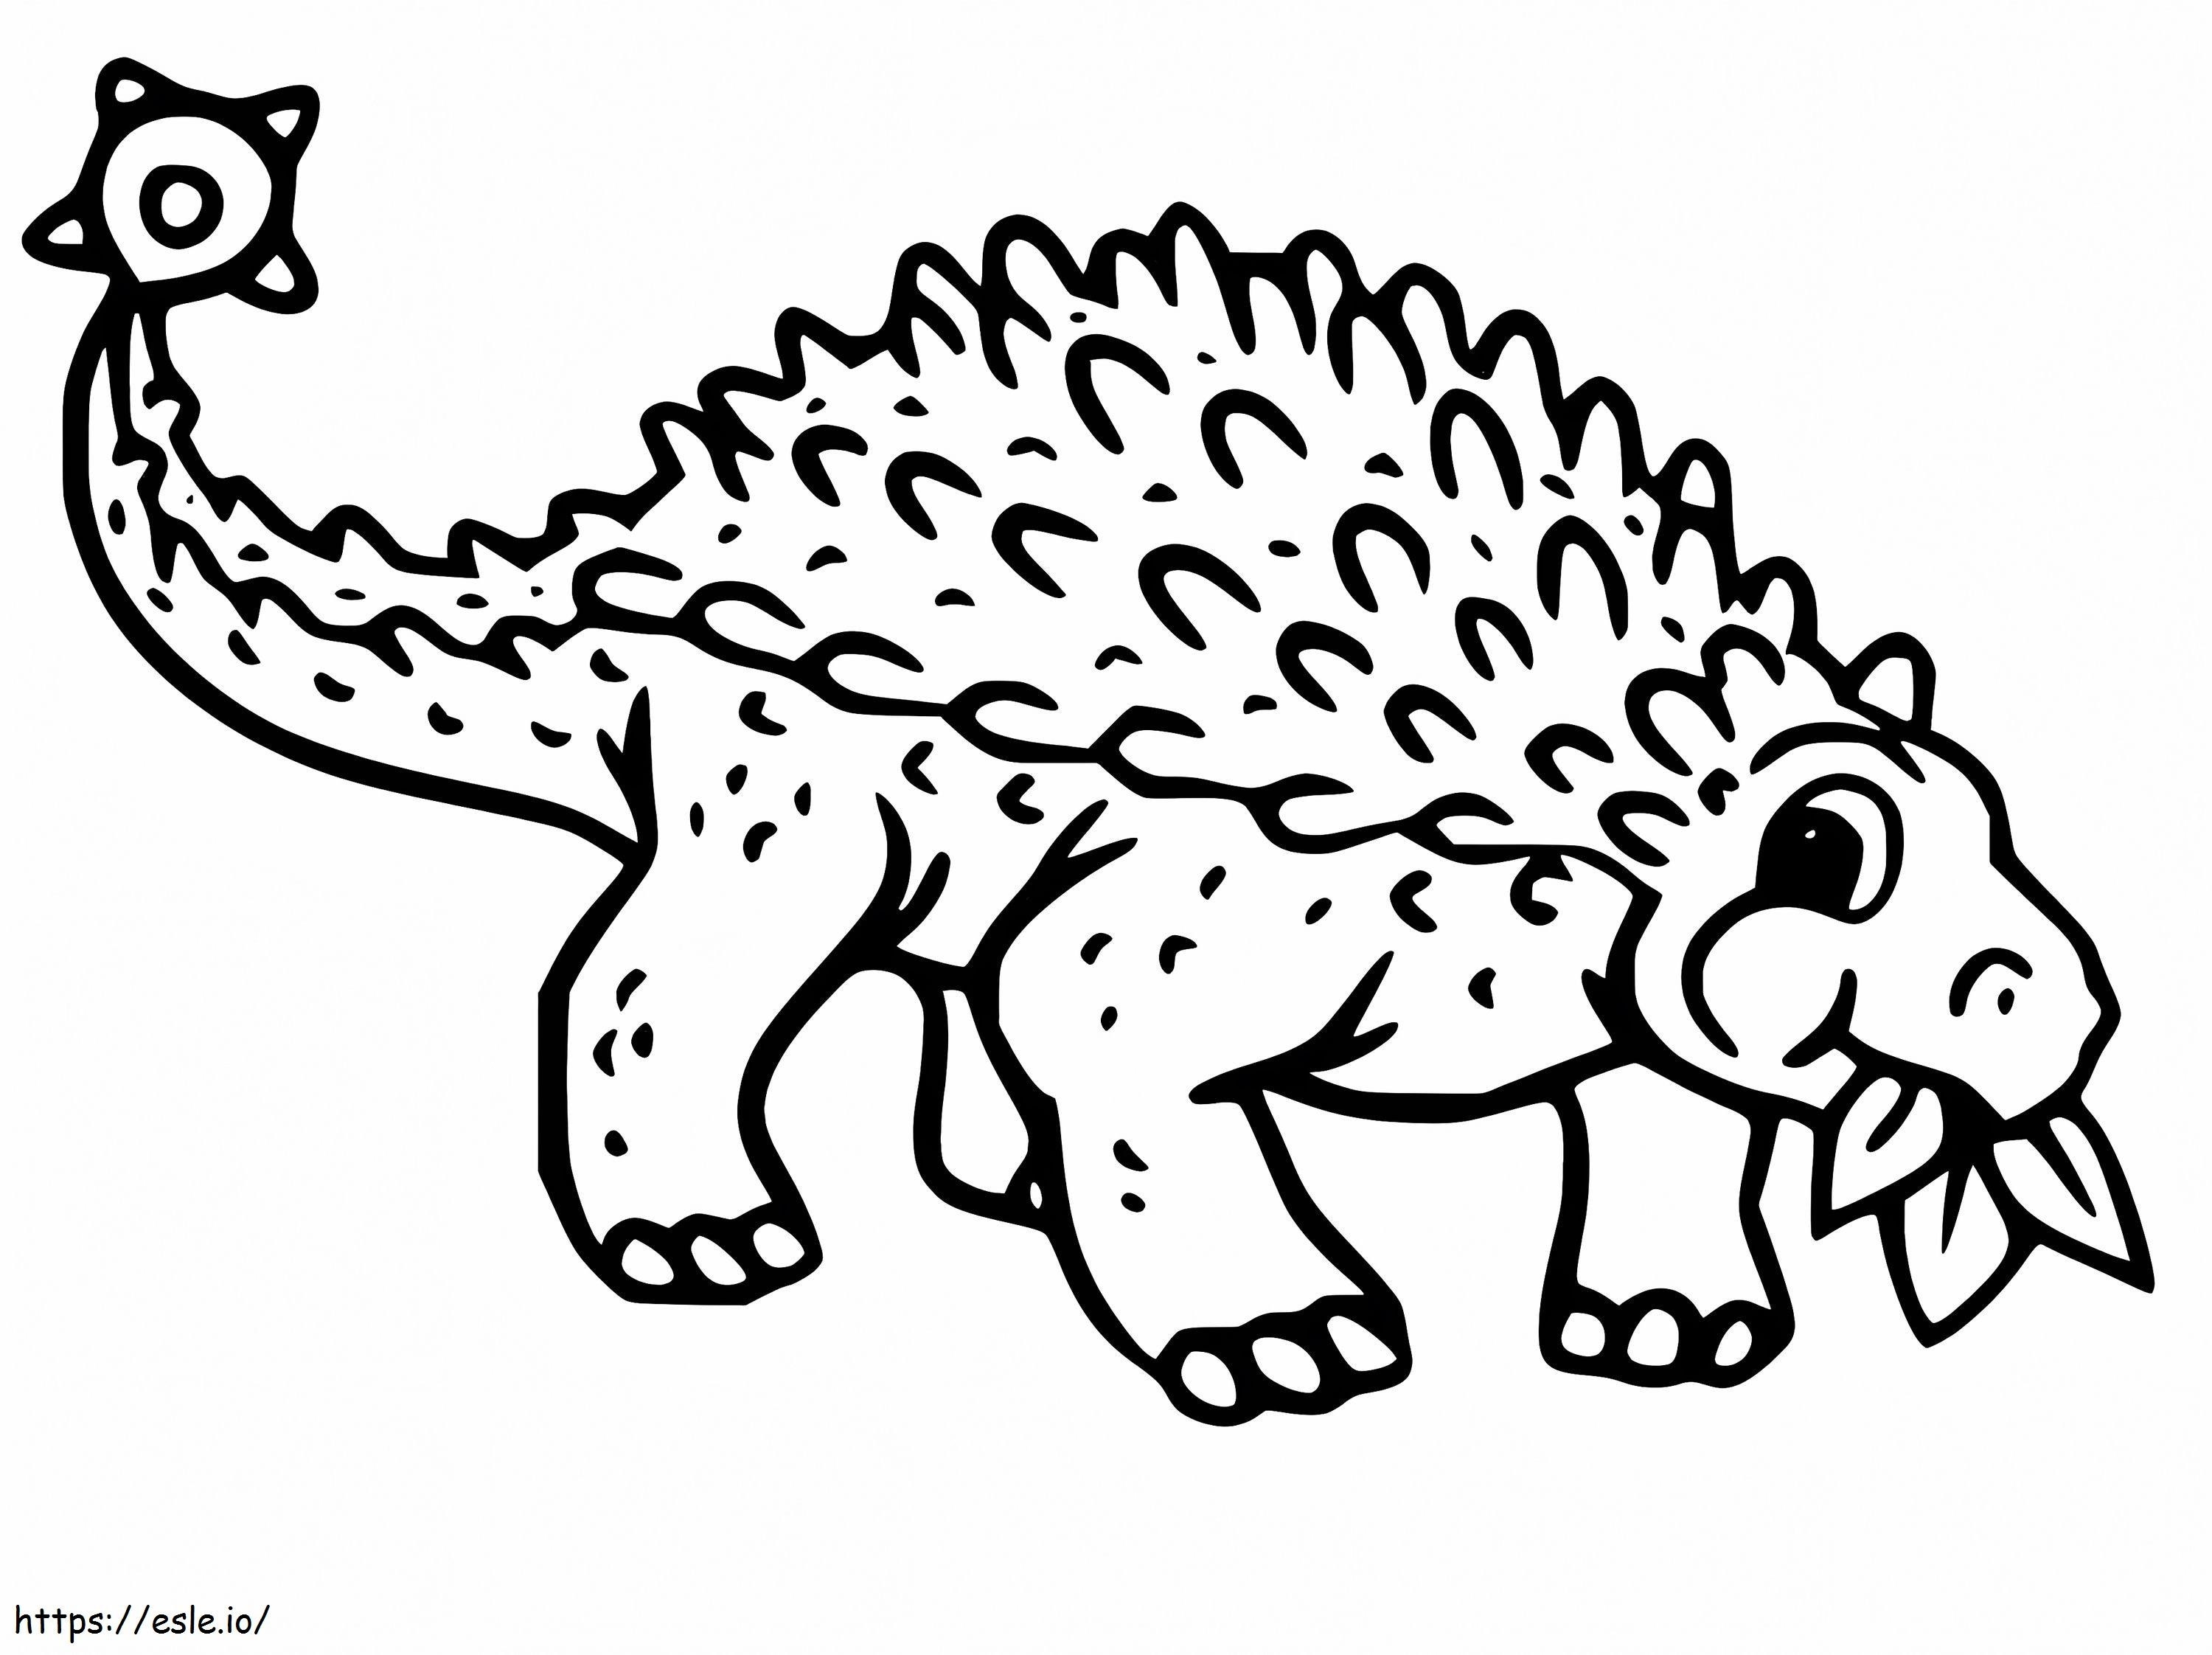 Mały Ankylozaur kolorowanka